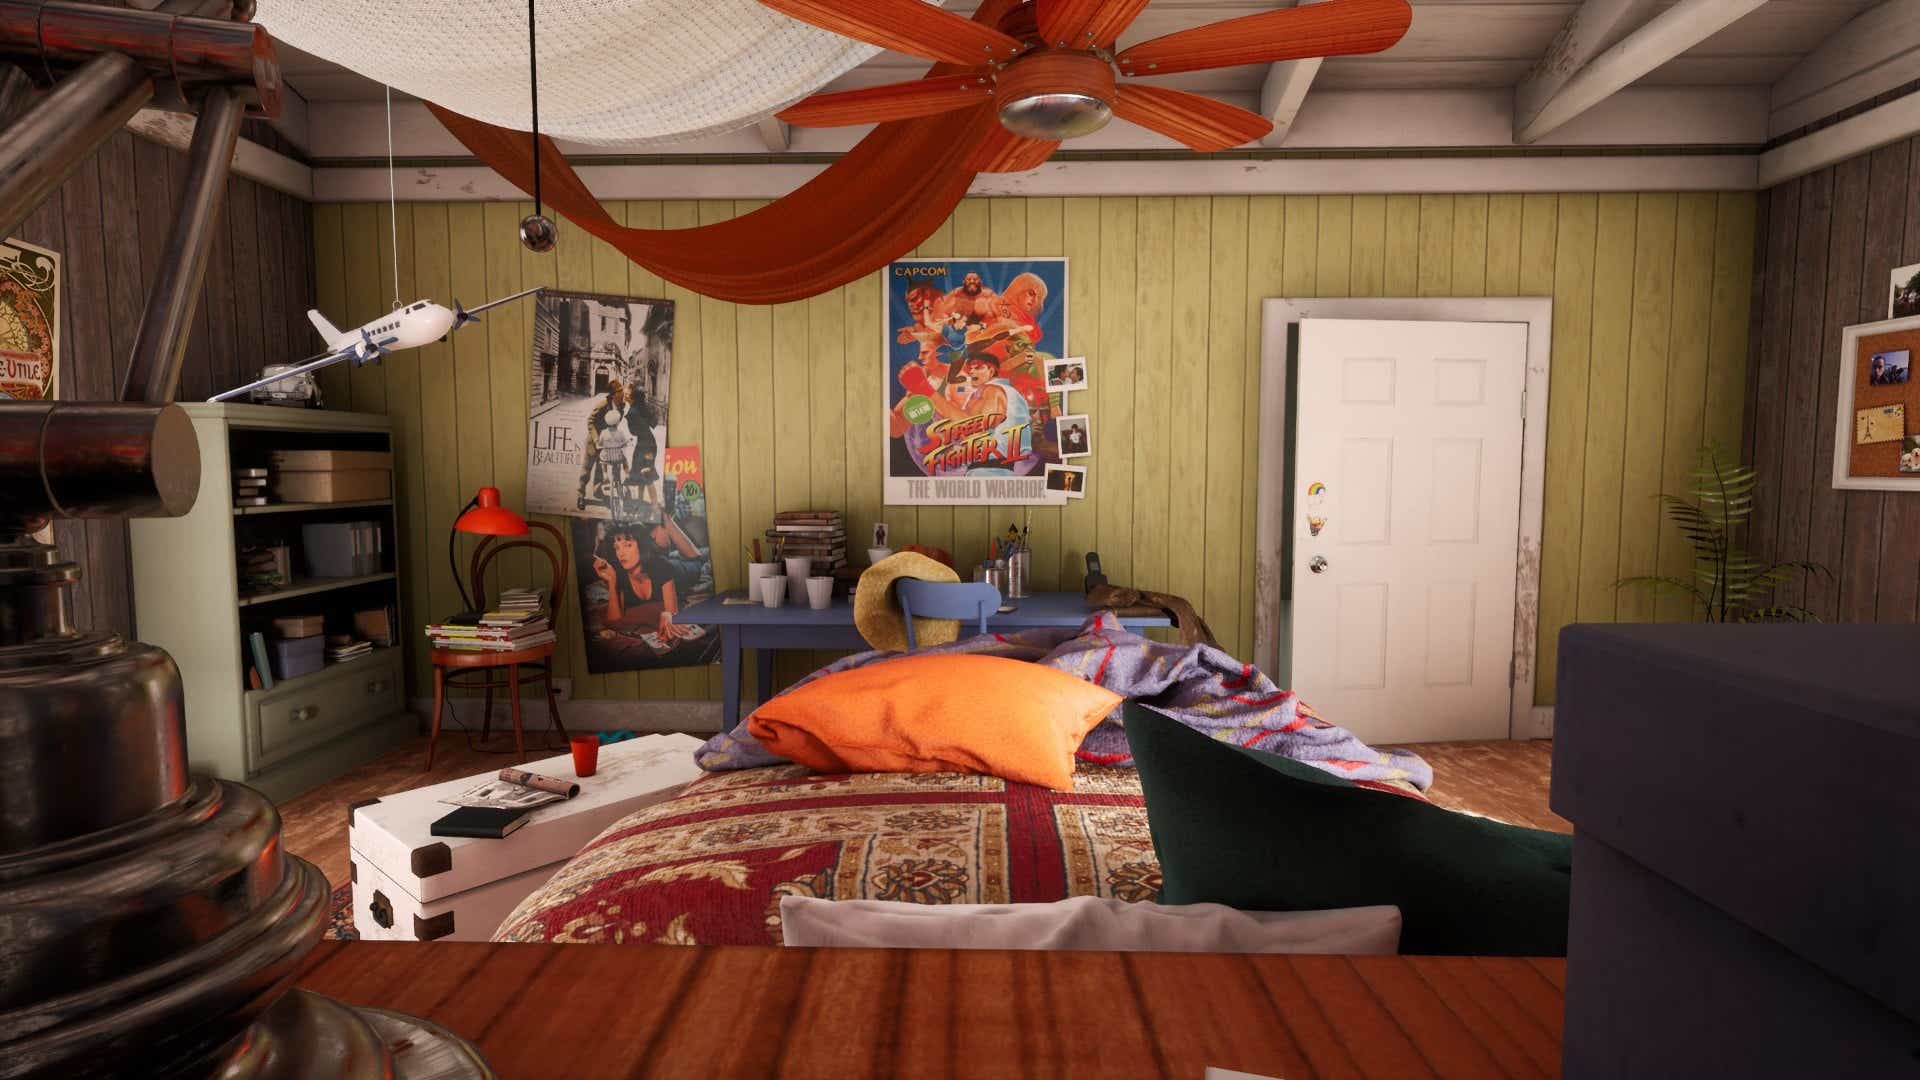 Дом 4 продолжение. Uncharted 4 Room. Интерьер спальни Unreal. Unreal engine спальня. Дом из Uncharted 4.